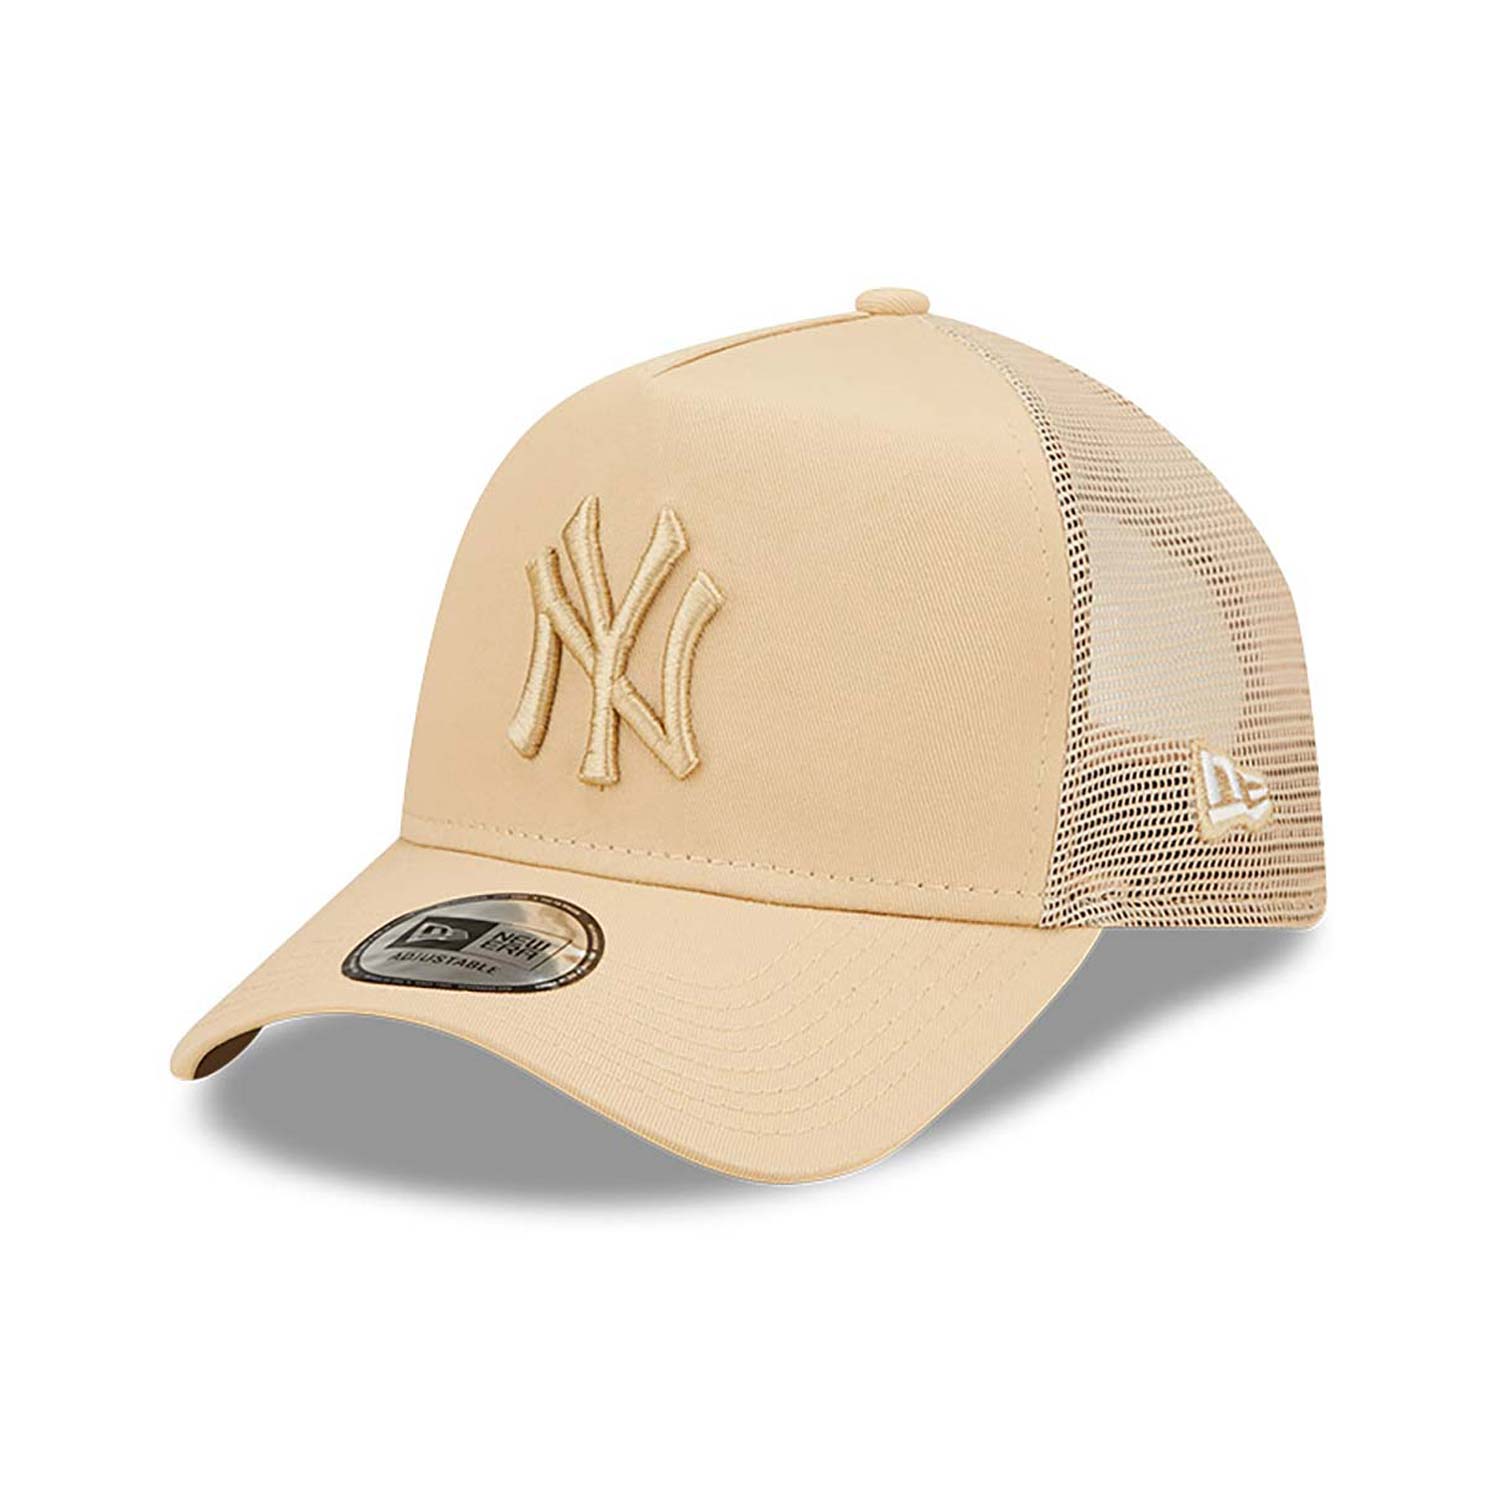 New York Yankees Tonal Mesh Stone A-Frame Trucker Cap